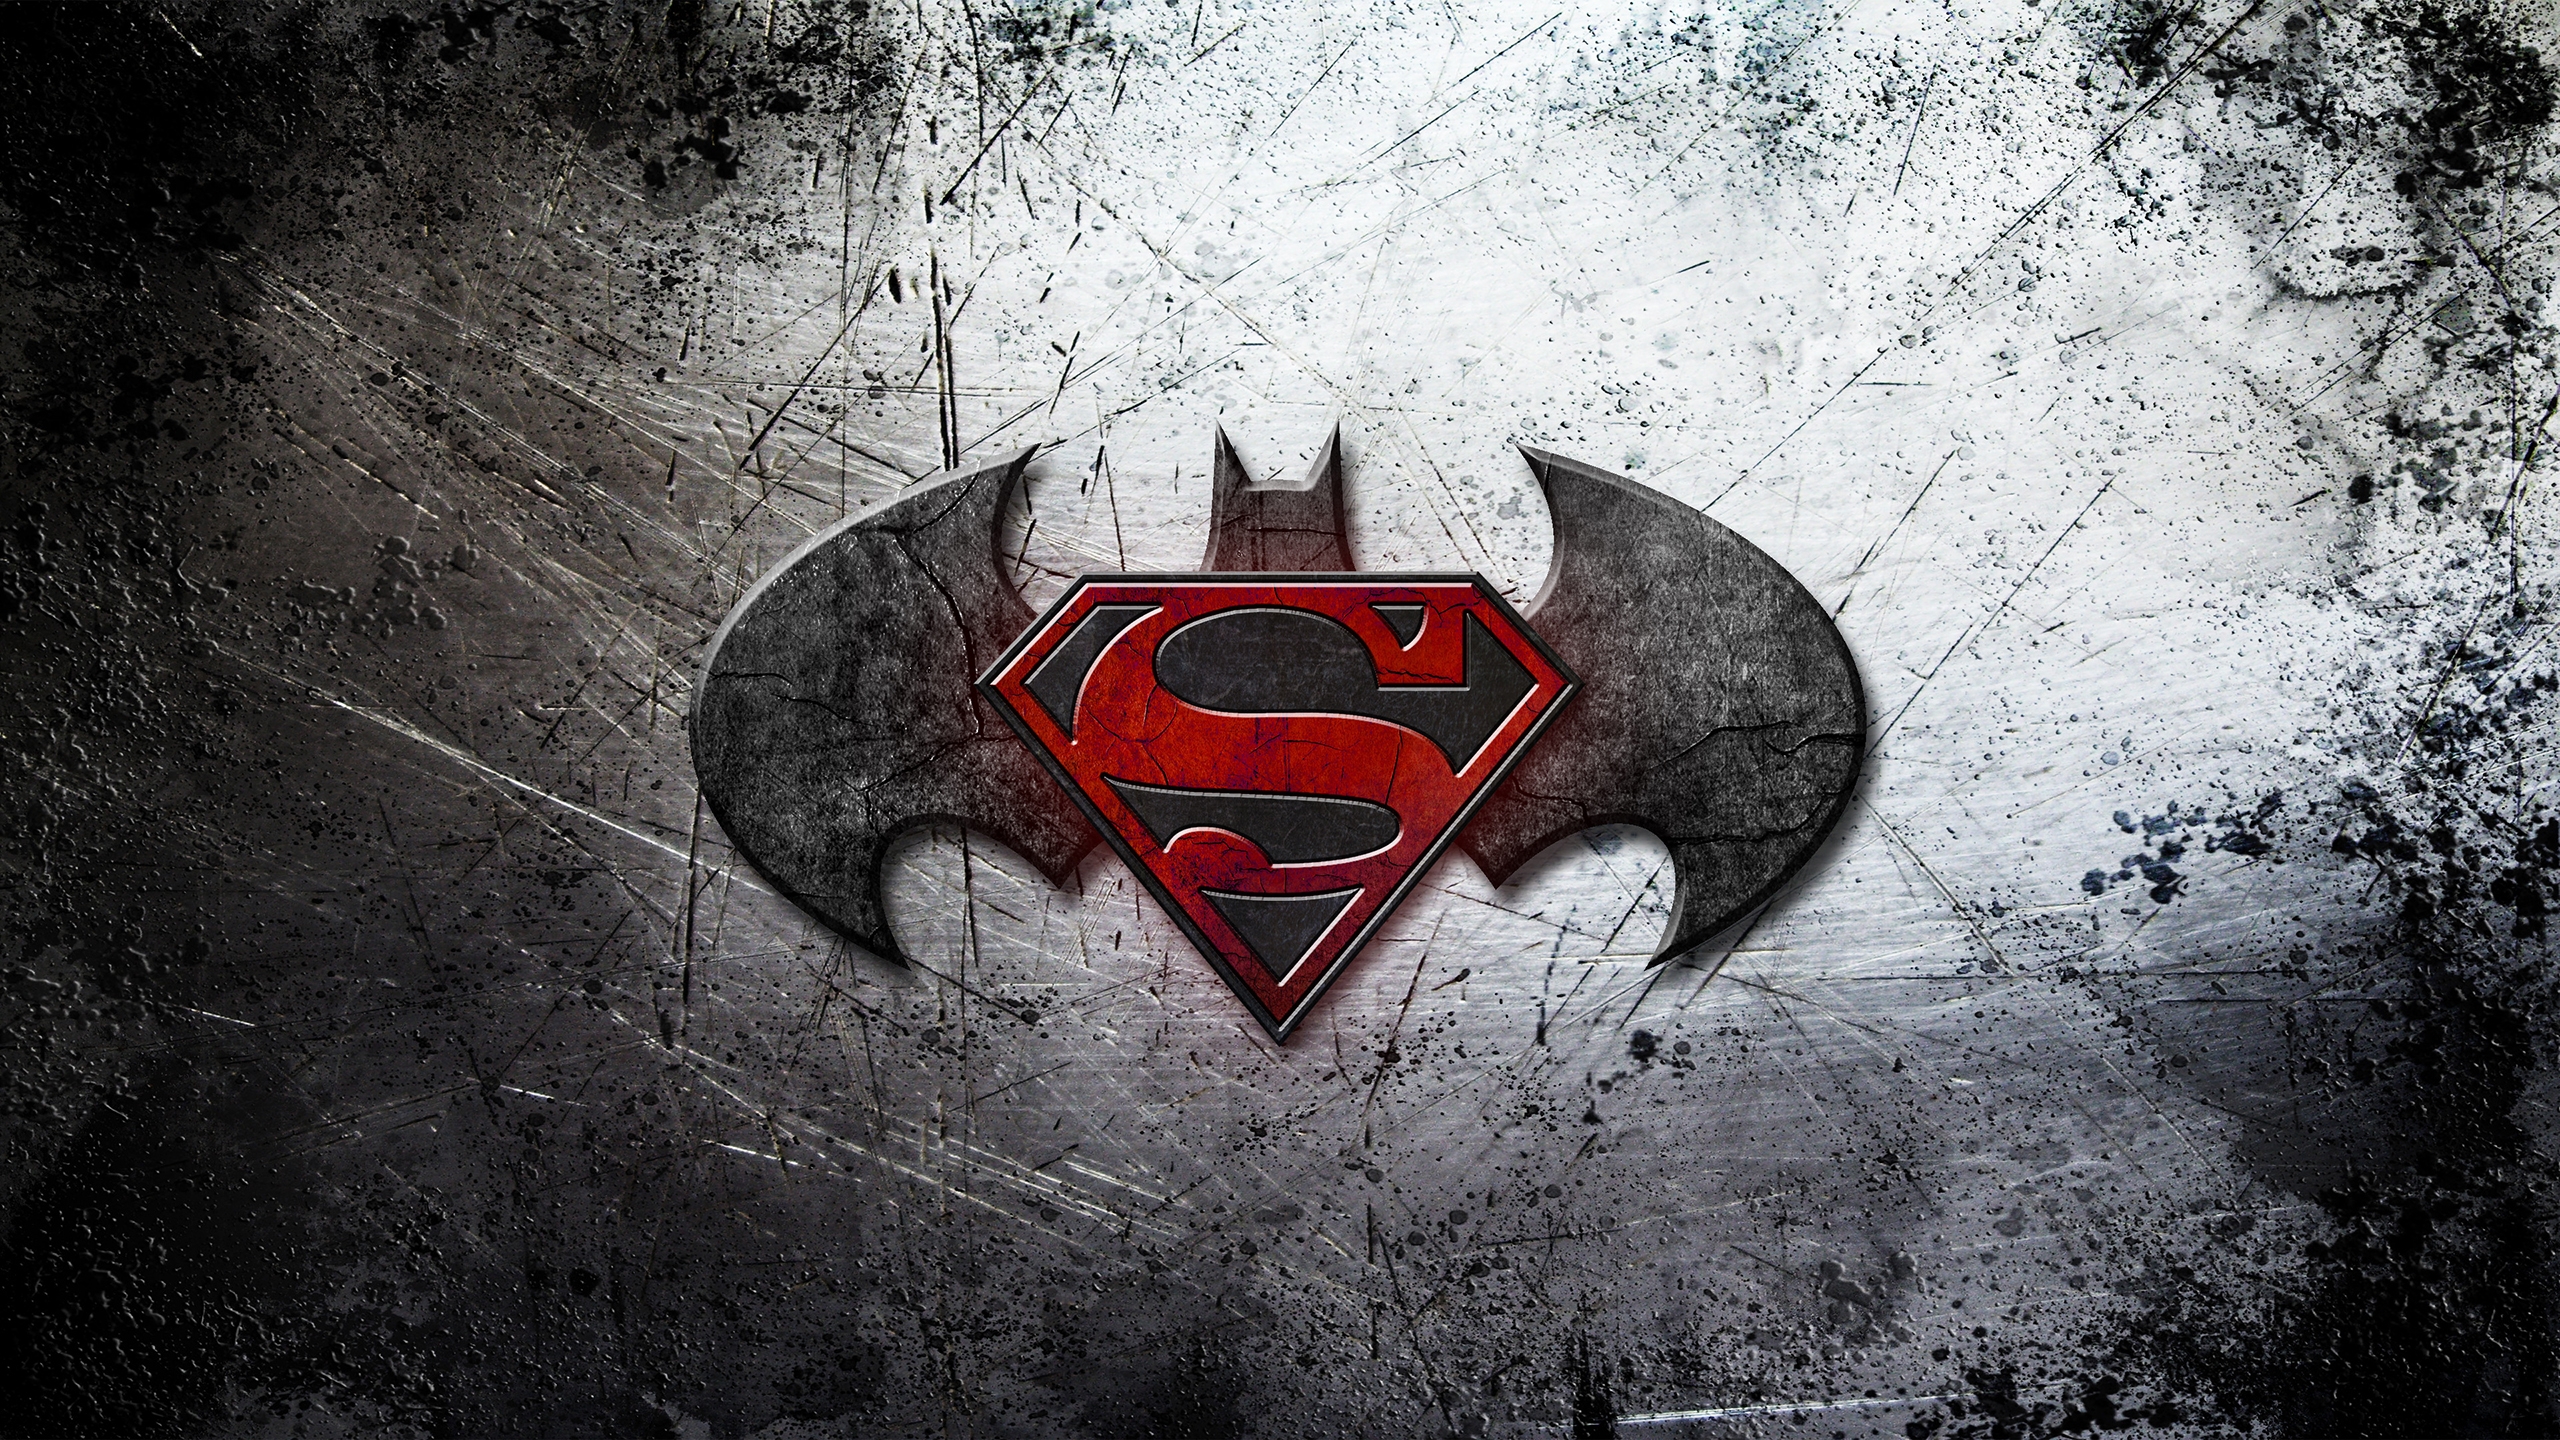 Batman vs Superman Logo Wallpaper in High Resolution at Movies 2560x1440